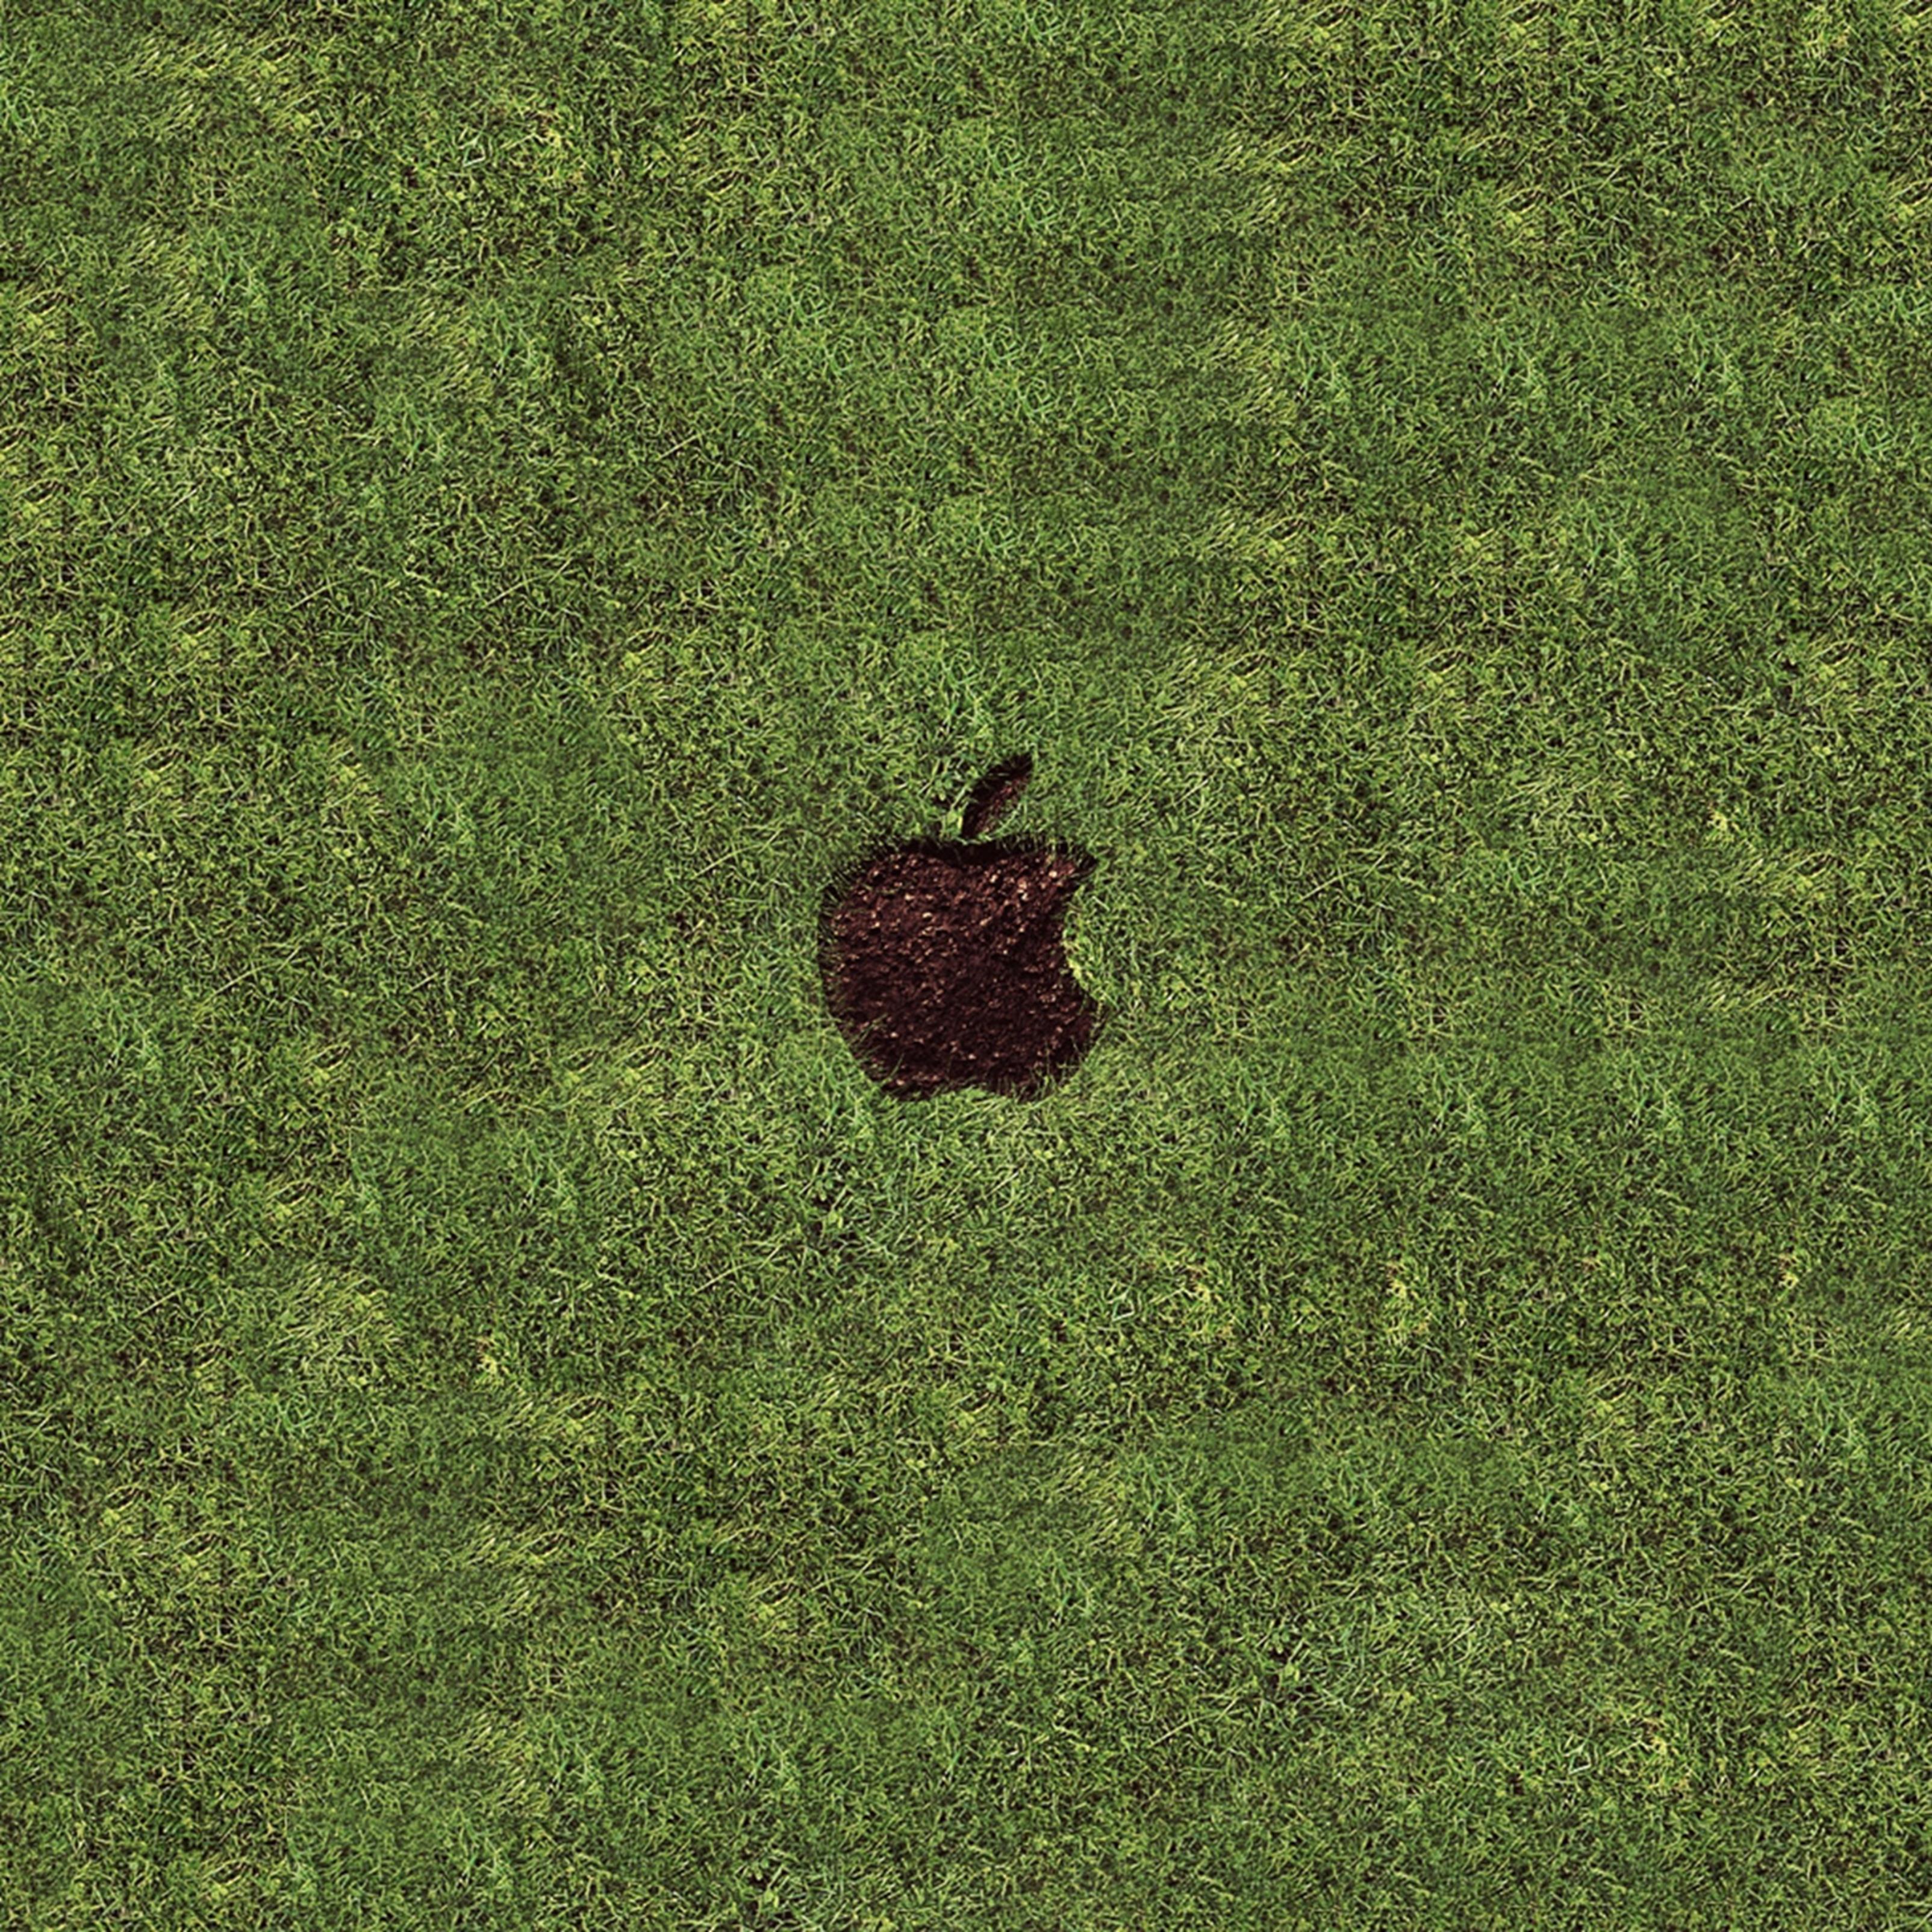 Apple Grass Ipad Wallpaper